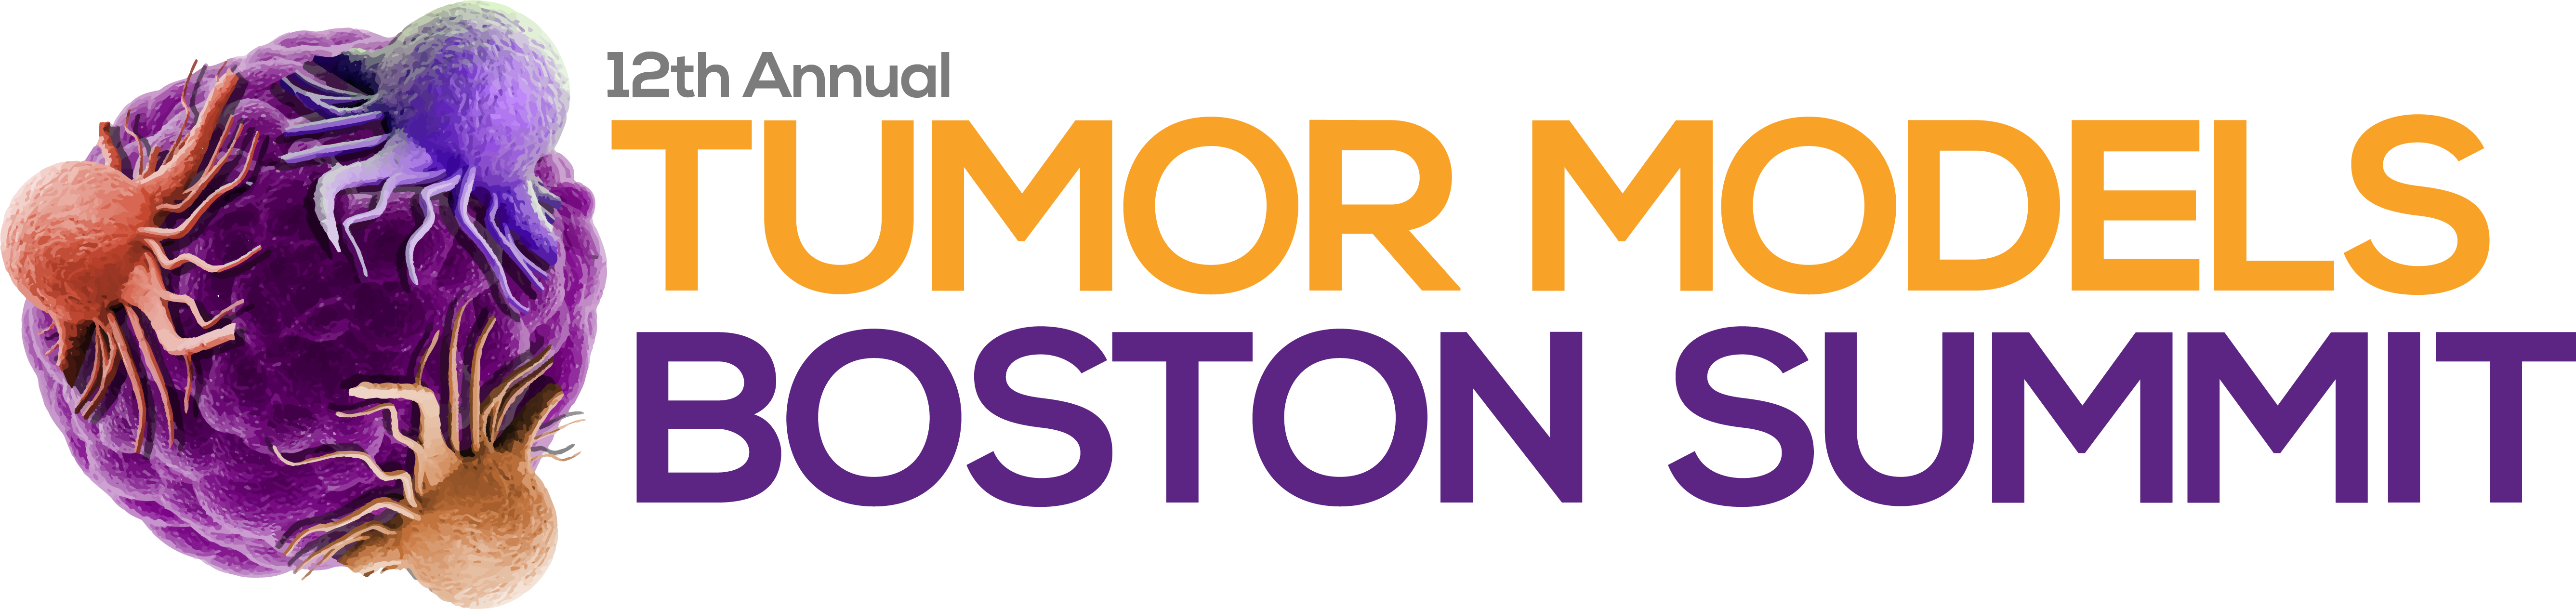 12th Tumor Models Boston Summit logo FINAL